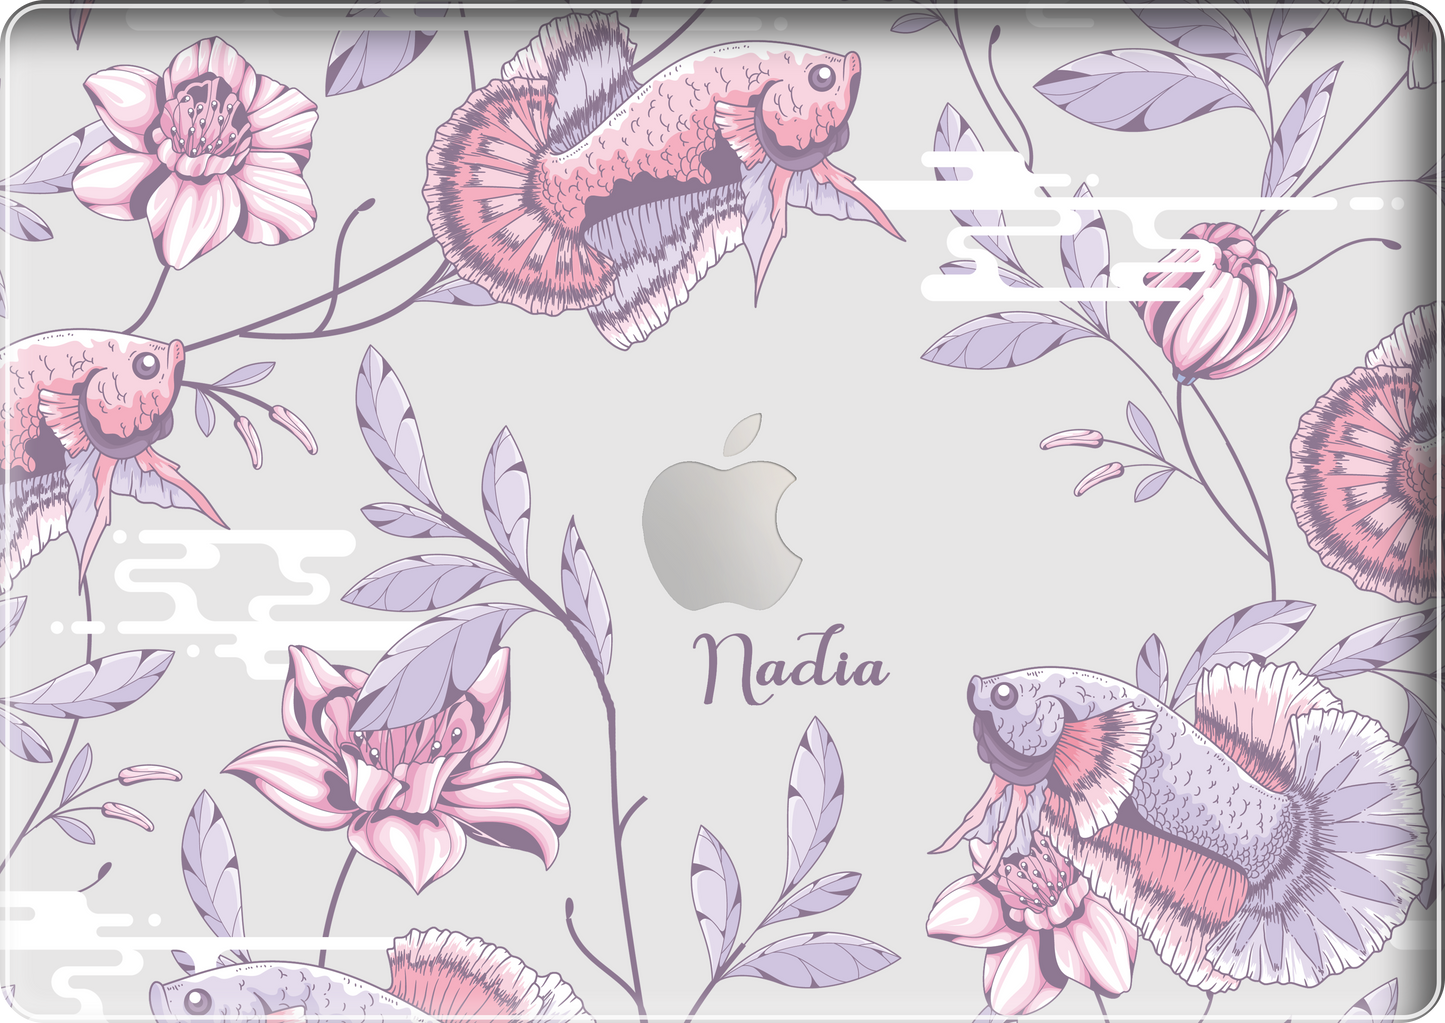 Macbook Snap Case - Fish & Floral 1.0